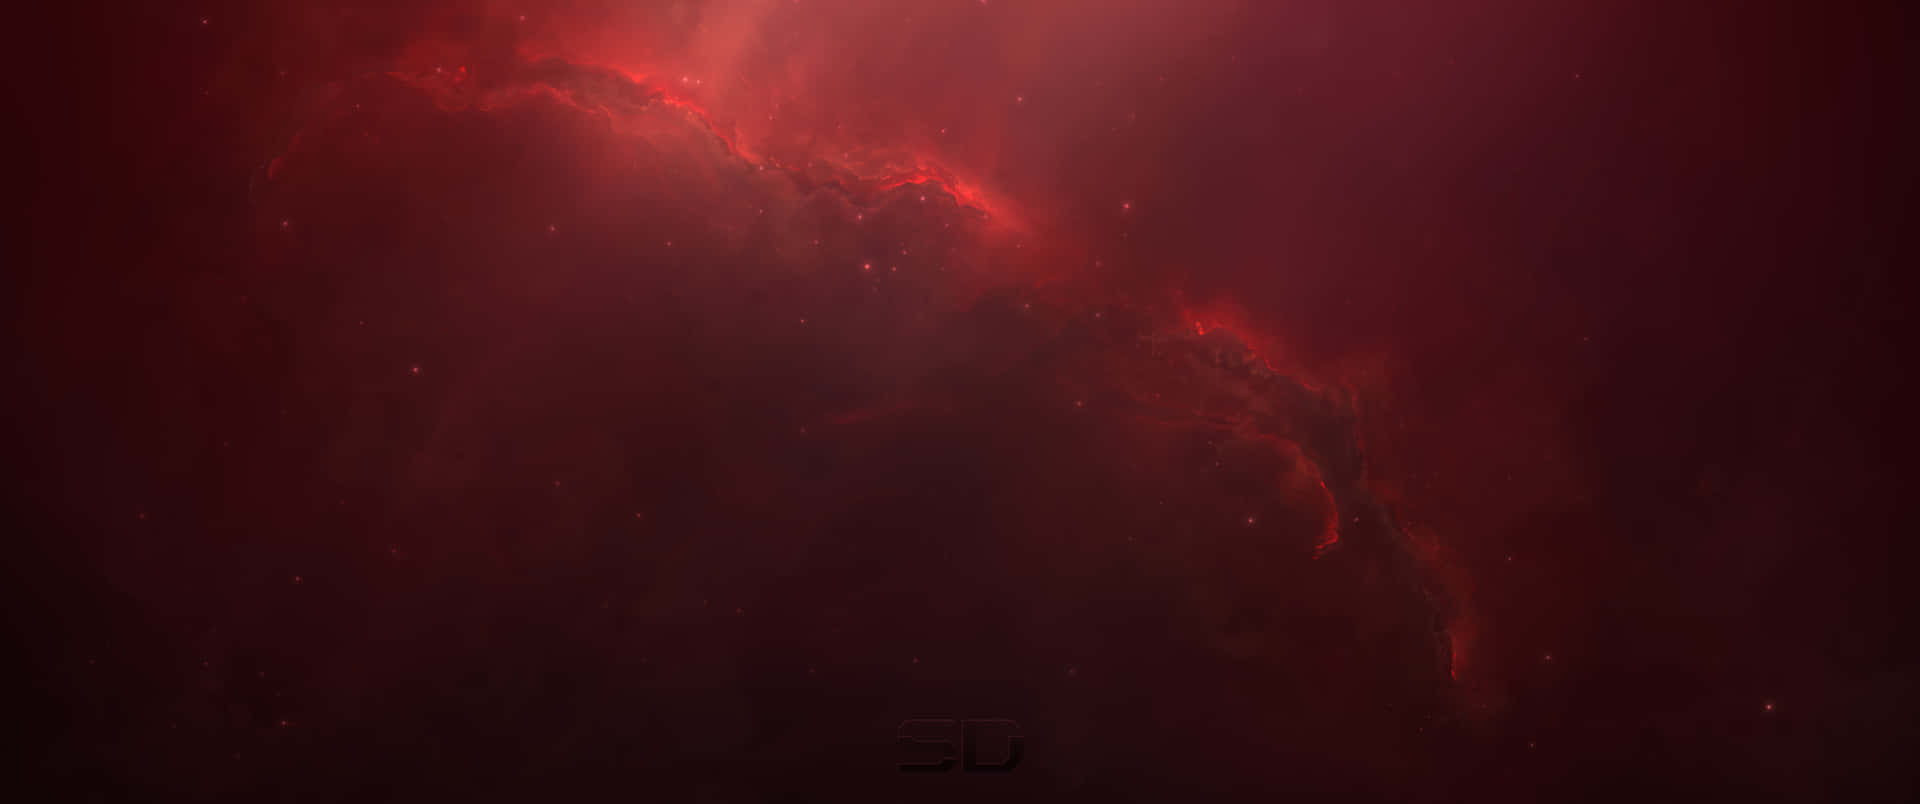 Galassianuvolosa Rossa Ultra Wide Hd Sfondo